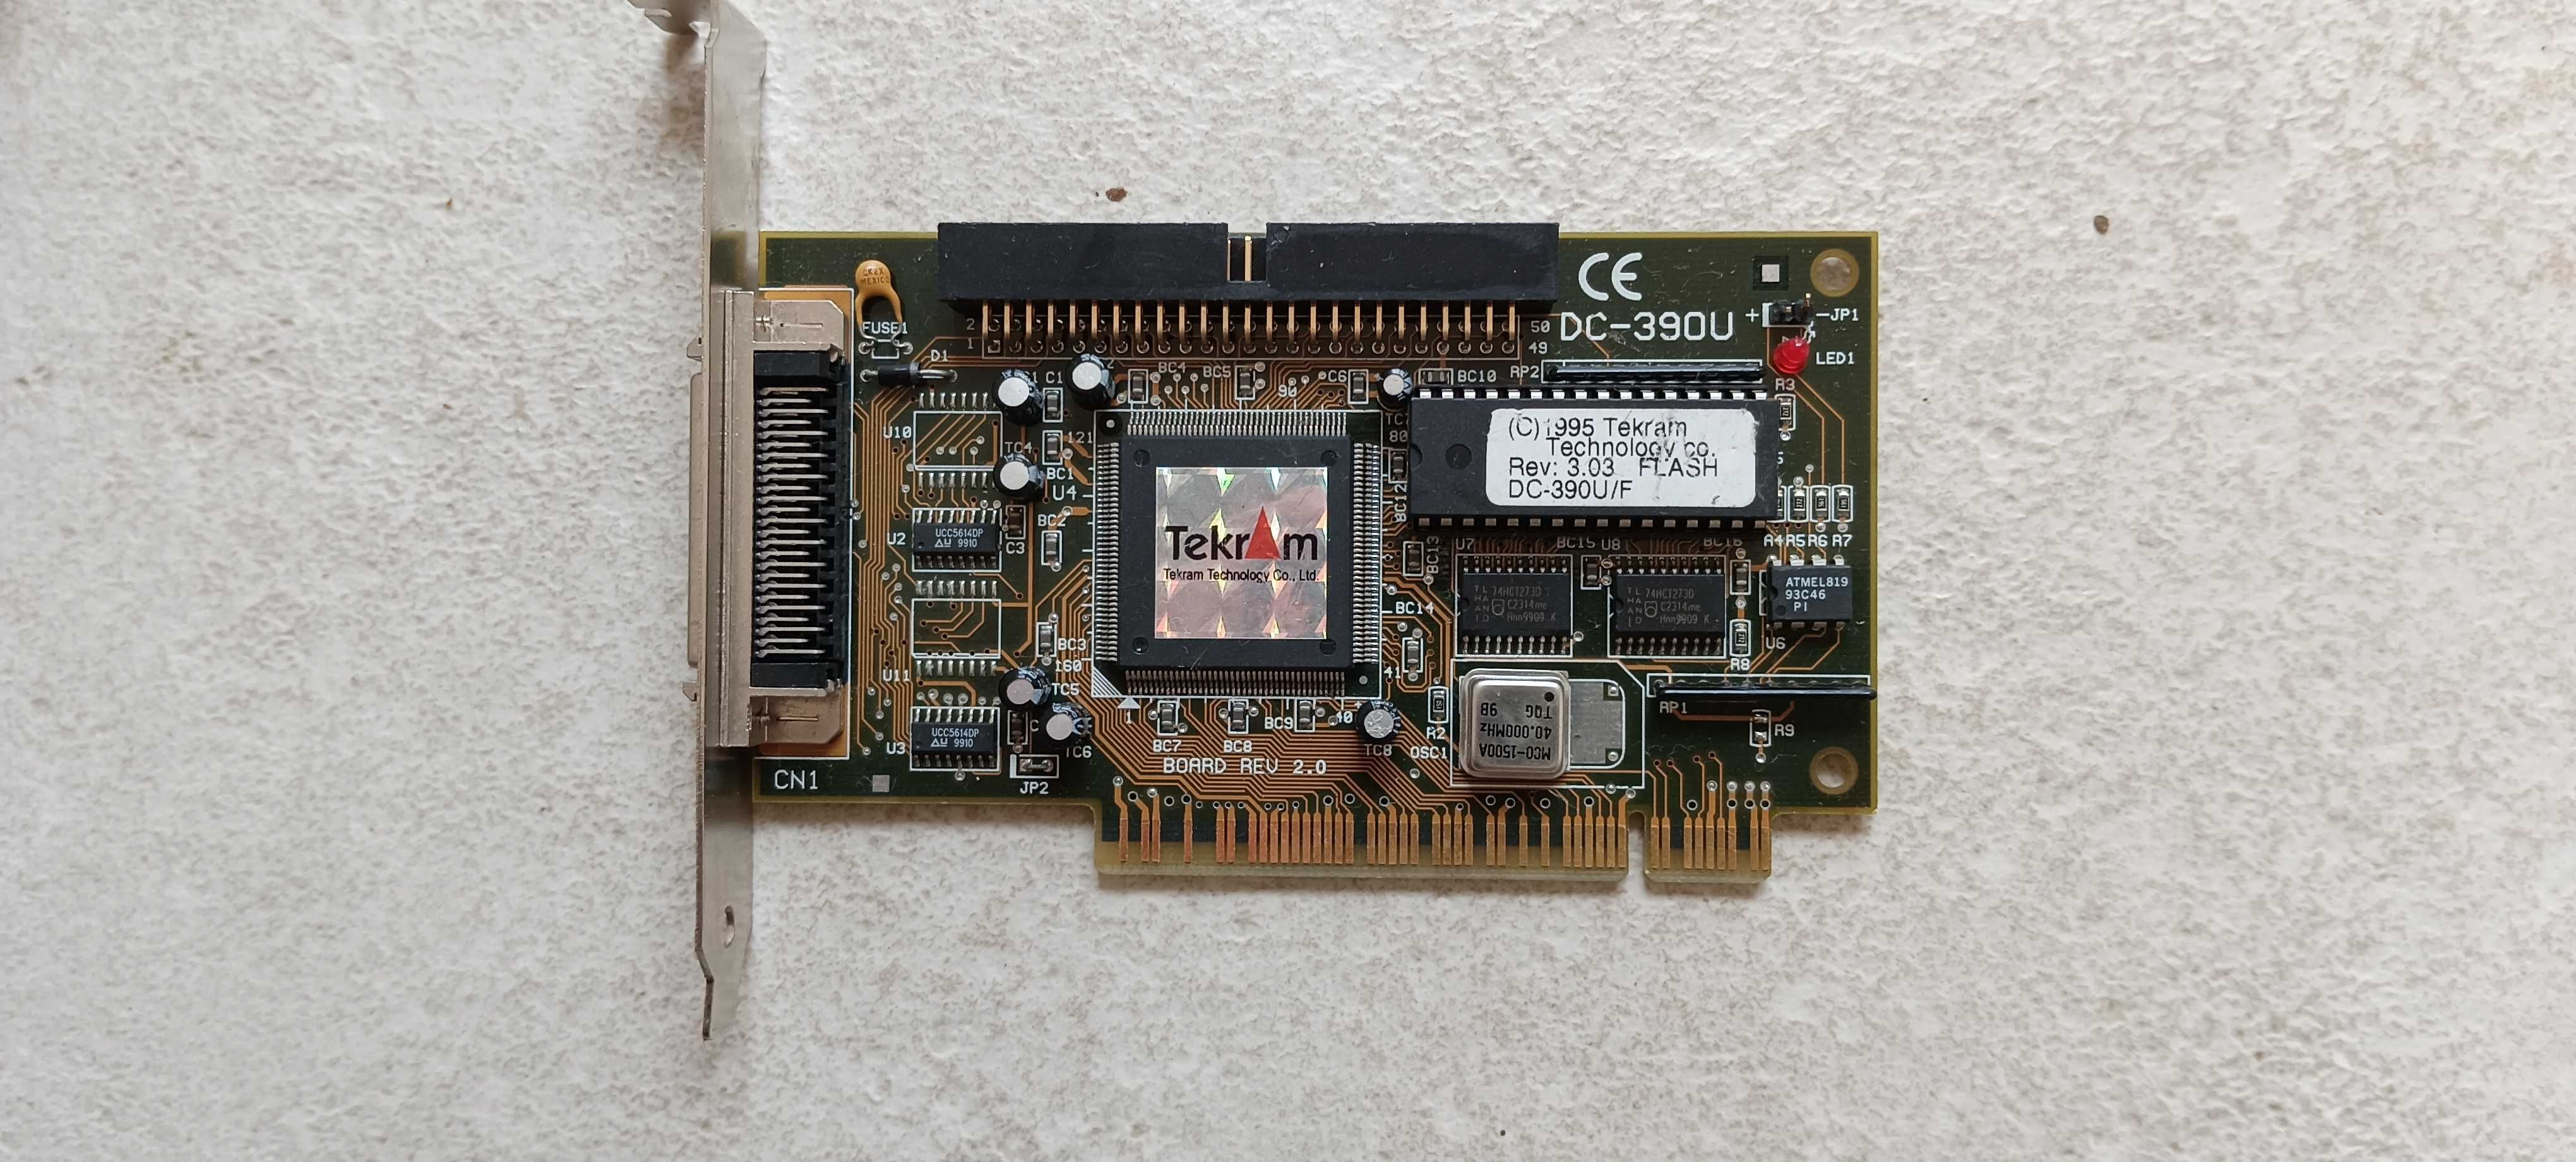 Tekram SCSI controller dc-390u/f